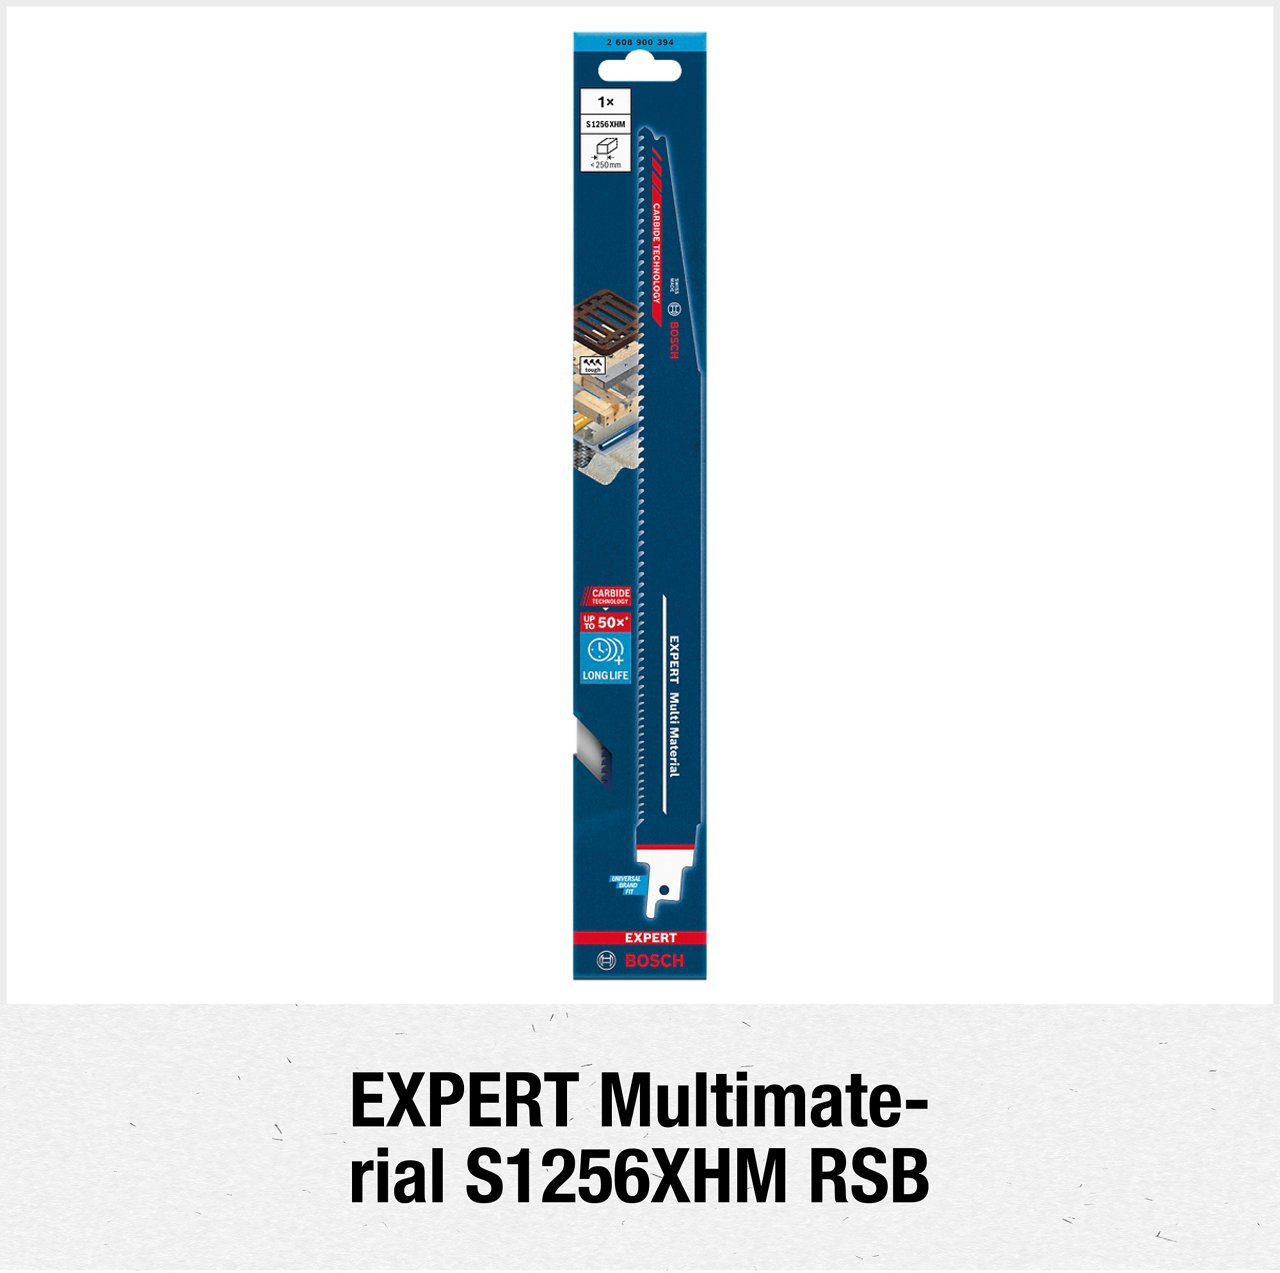 Expert Multimaterial S1256XHM RSB